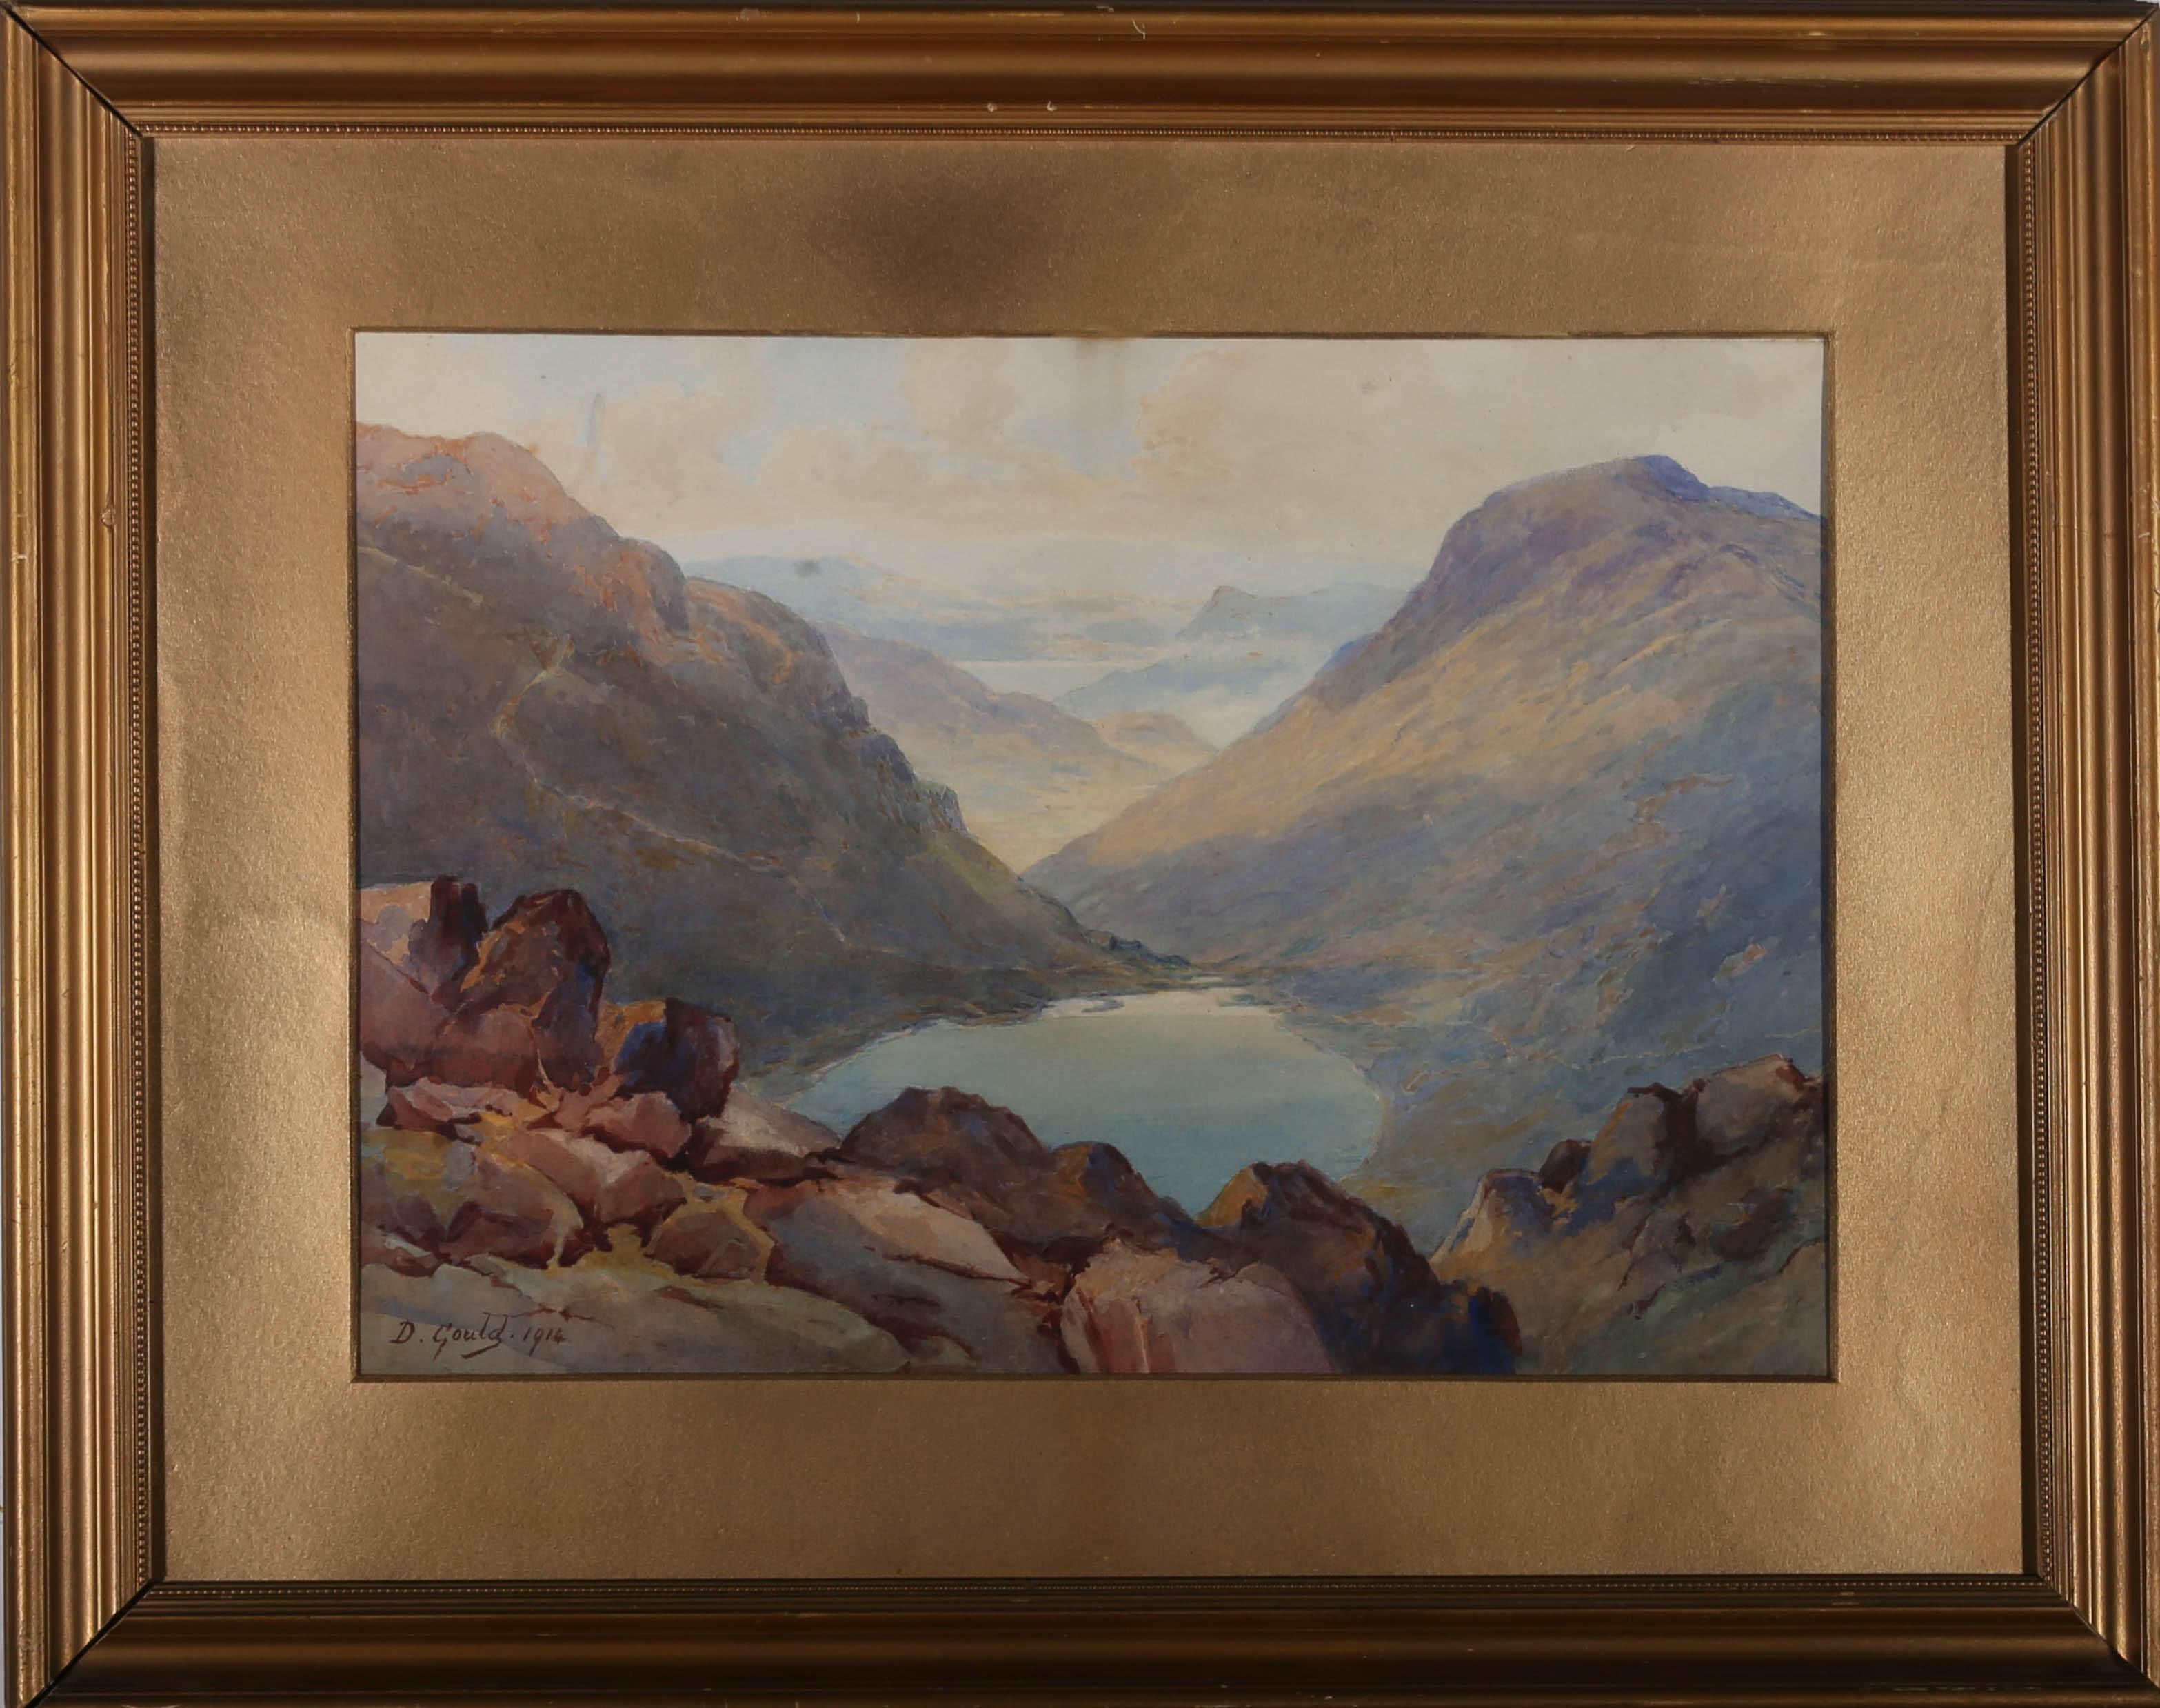 Daphne Boothby Landscape Art - David Gould (1871-1952) - Framed 1914 Watercolour, Grisedale Farm & Pass